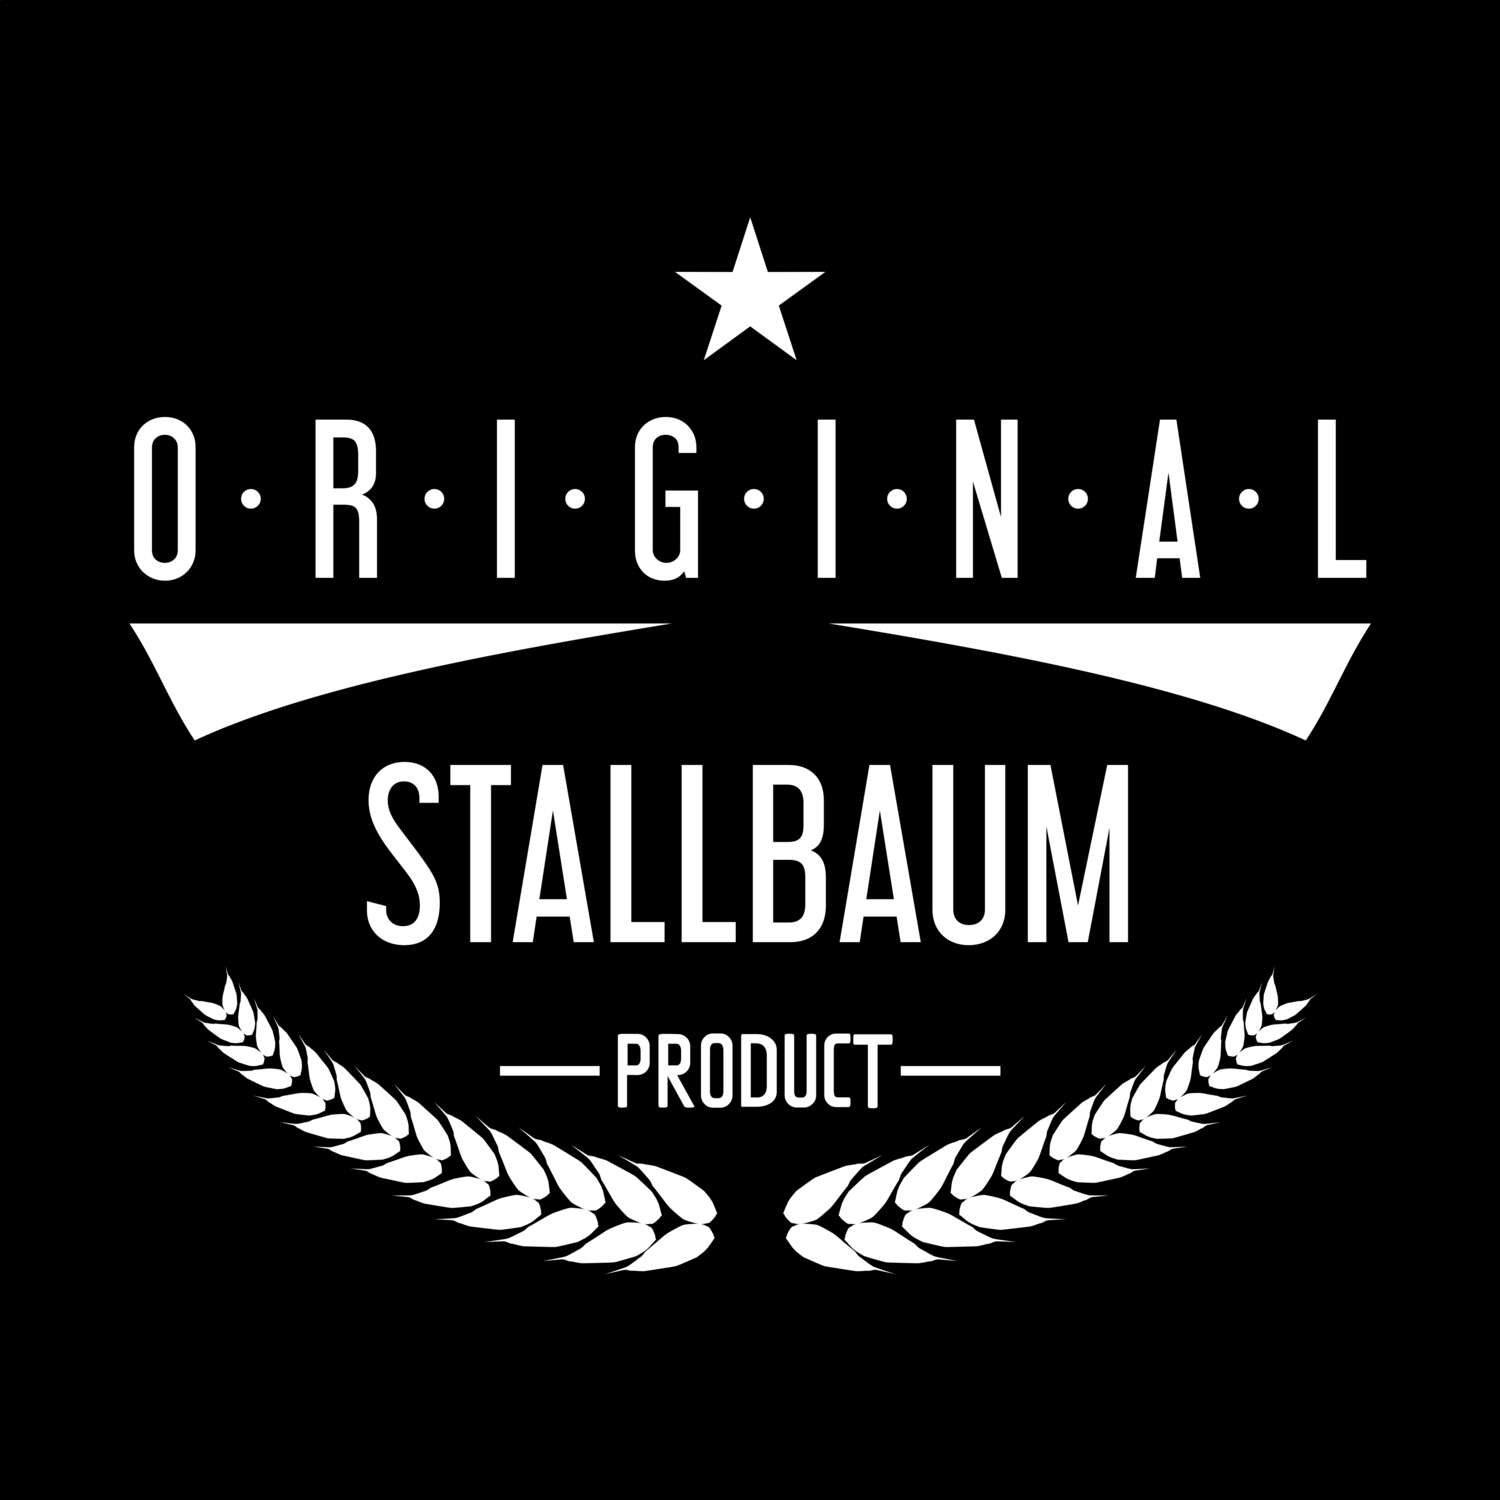 Stallbaum T-Shirt »Original Product«